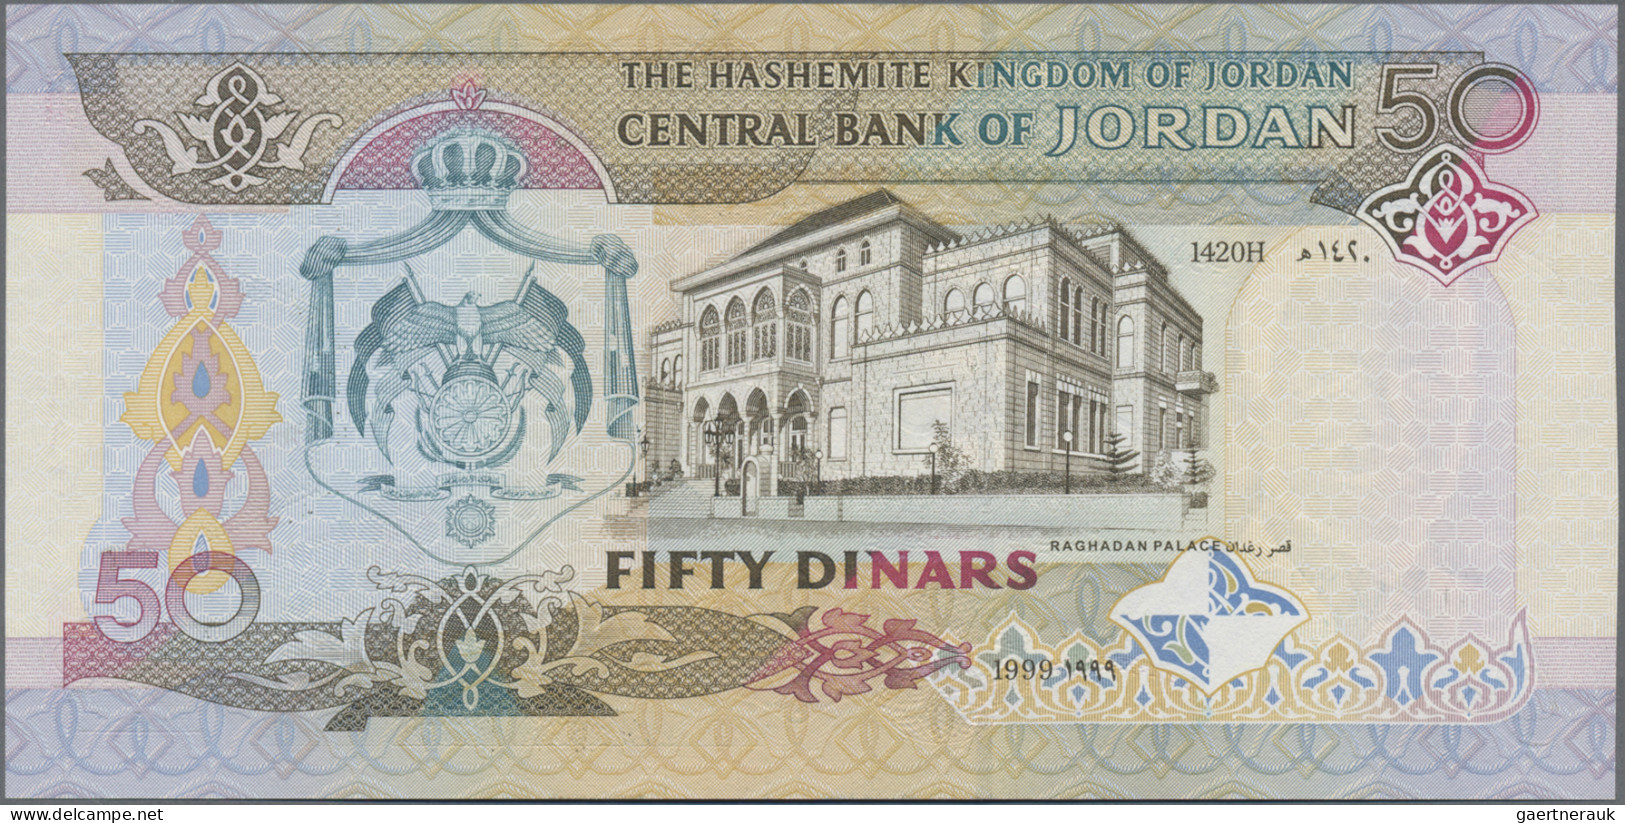 Jordan: Central Bank Of Jordan, 50 Dinars 1999, P.33 In UNC Condition. - Jordan